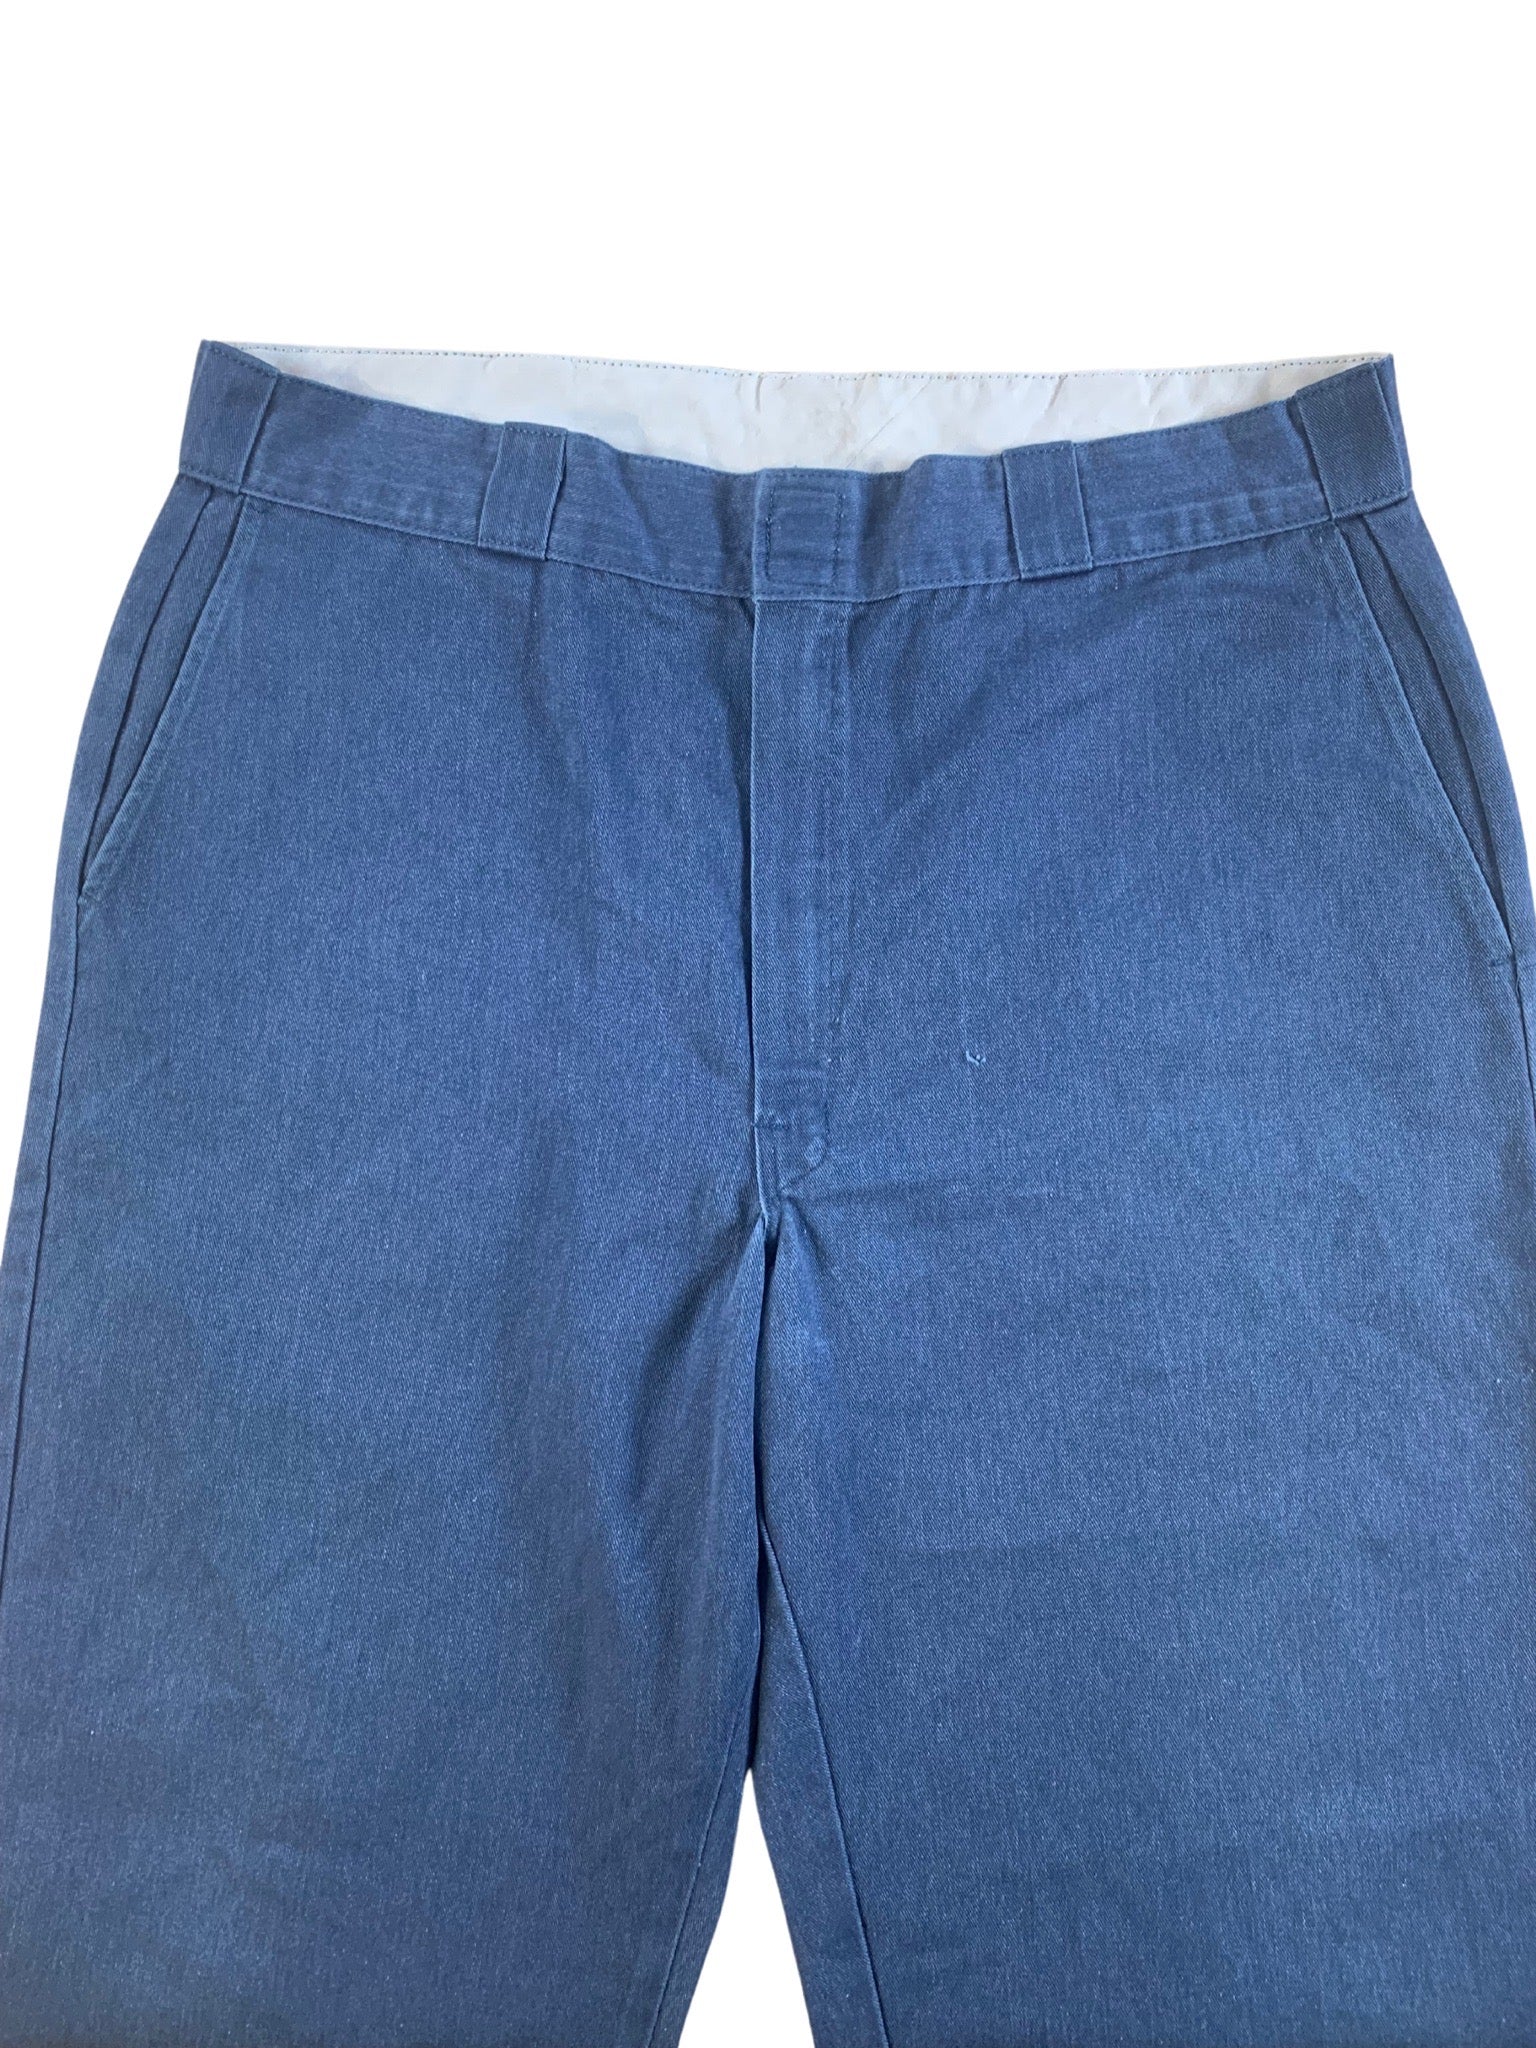 1x Vintage DICKIES Navy Blue Straight Leg Trousers - Waist 34 - Length 32 - Vintage Superstore Online